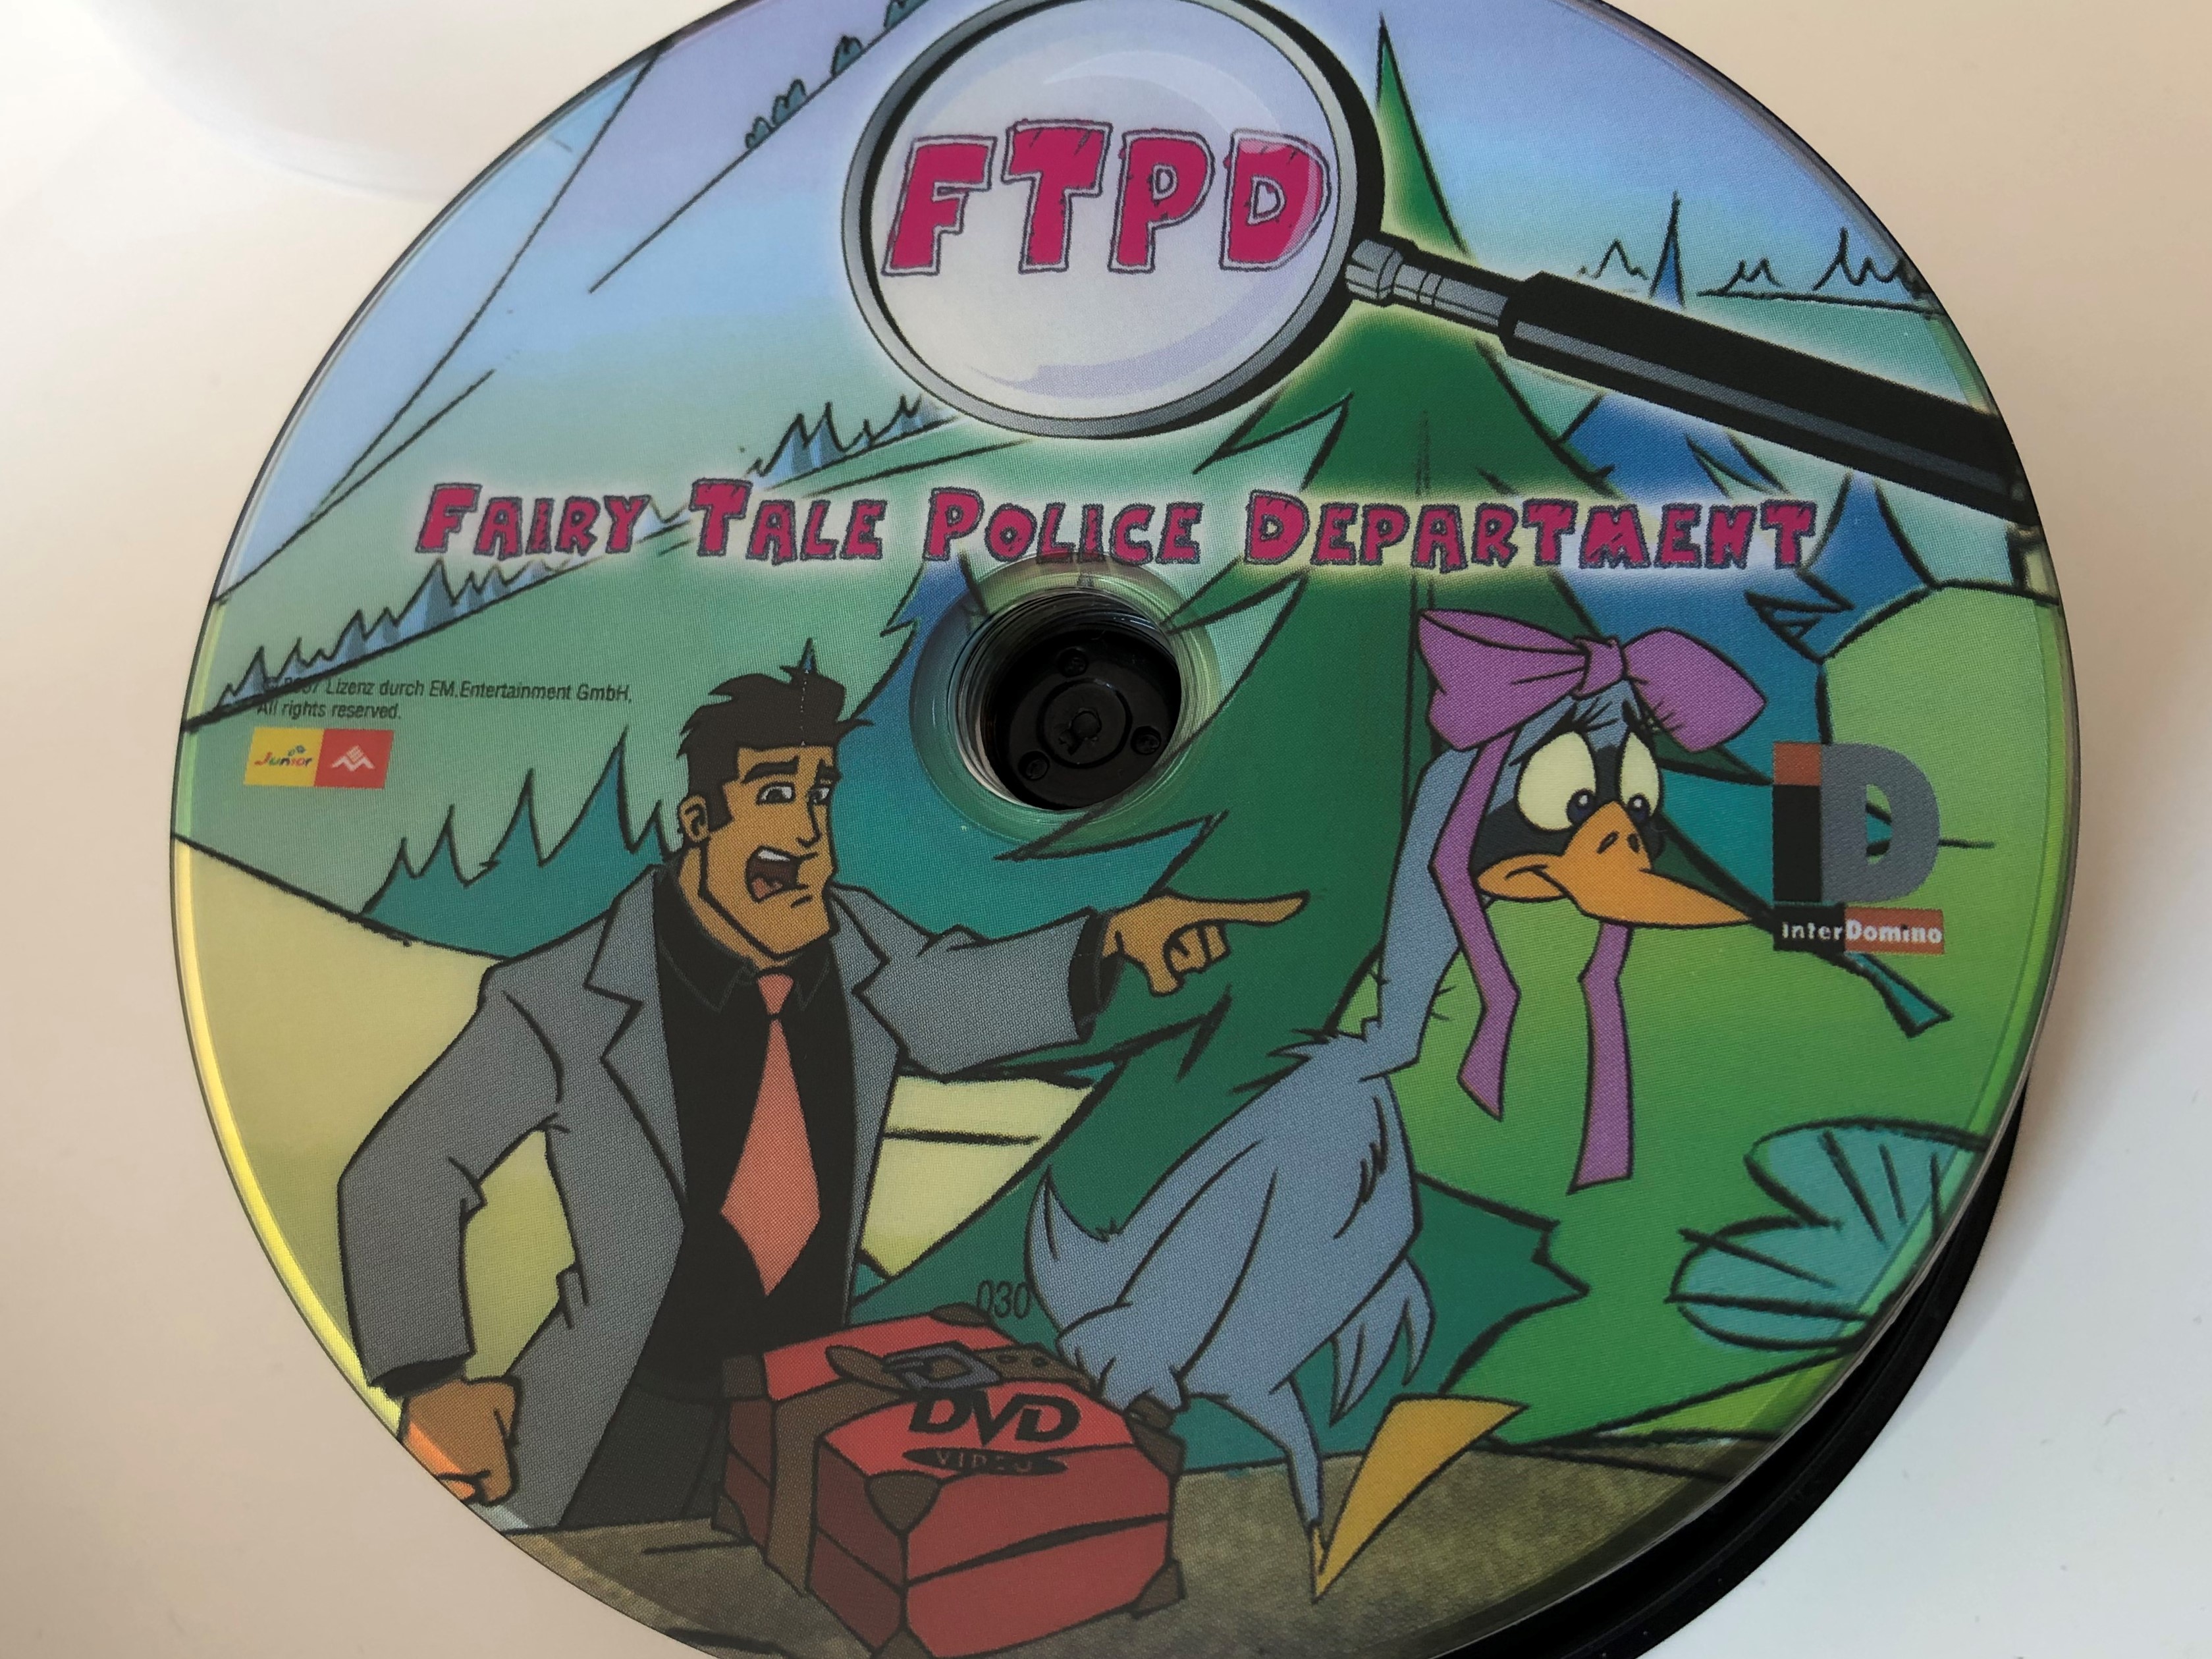 fairy-tale-police-department-3.-dvd-m-akt-k-3.-ha-tudni-akarod-az-igazat-2.jpg